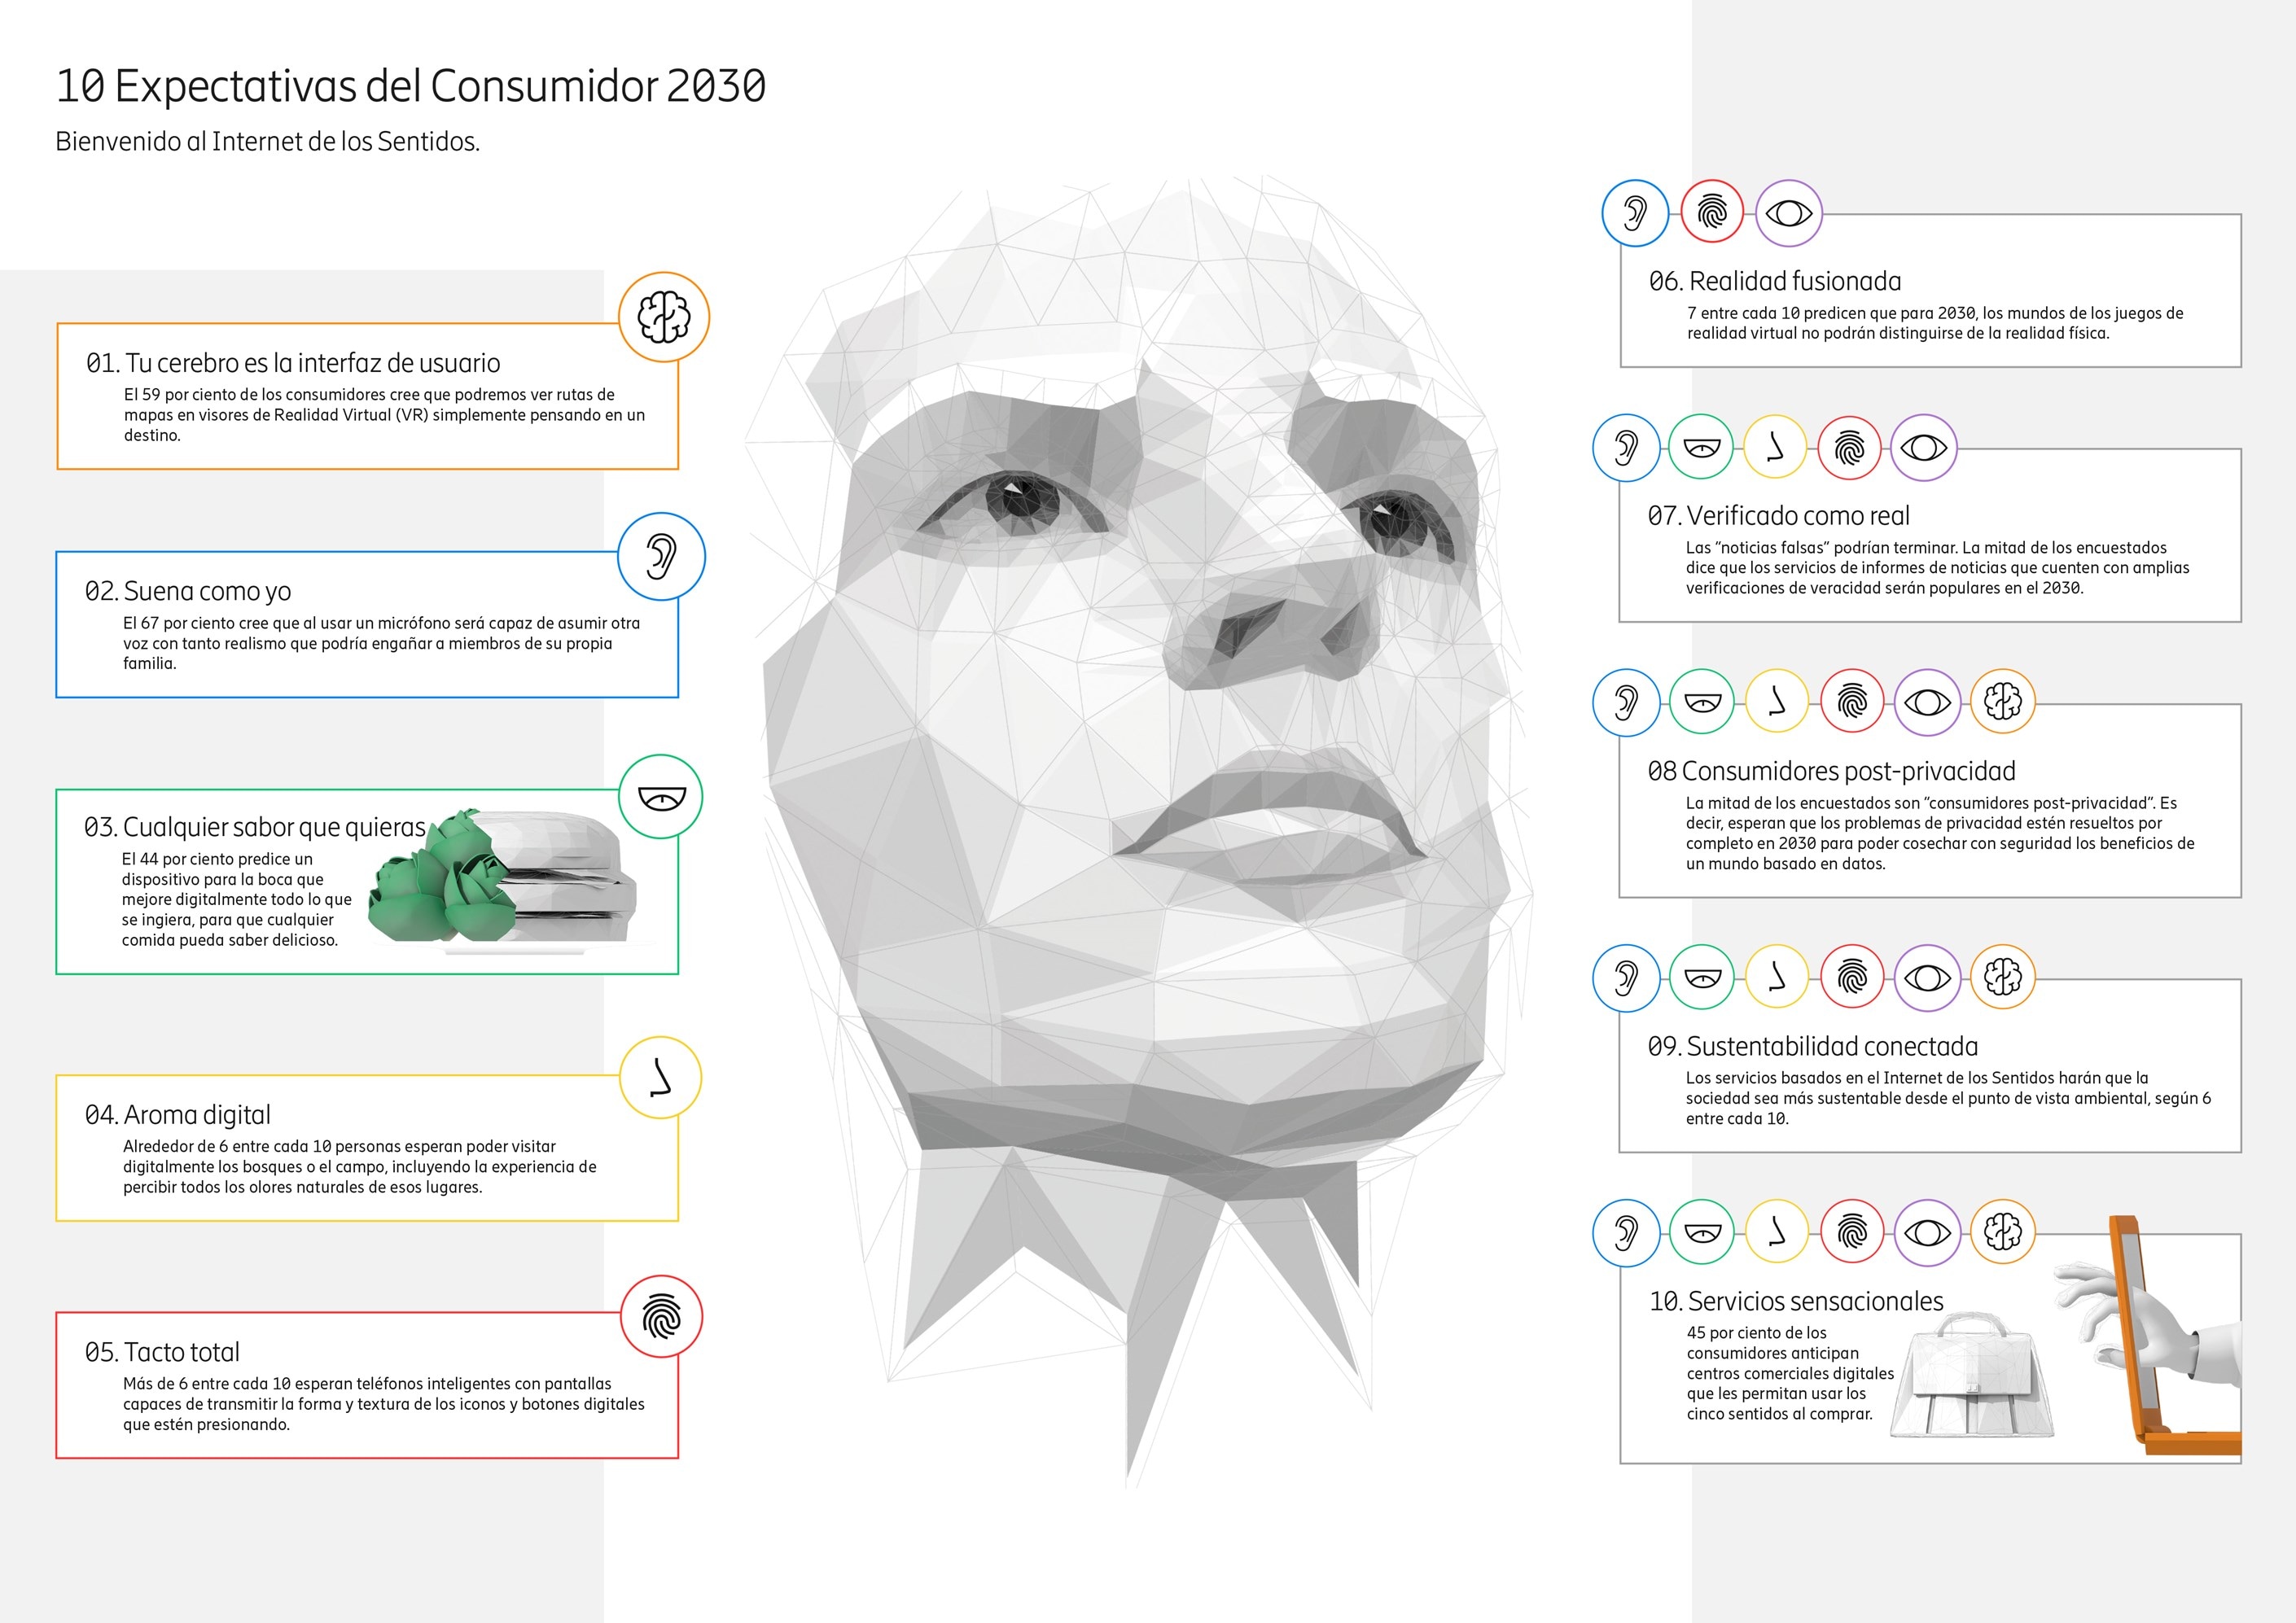 10 Expectativas del Consumidor para 2030